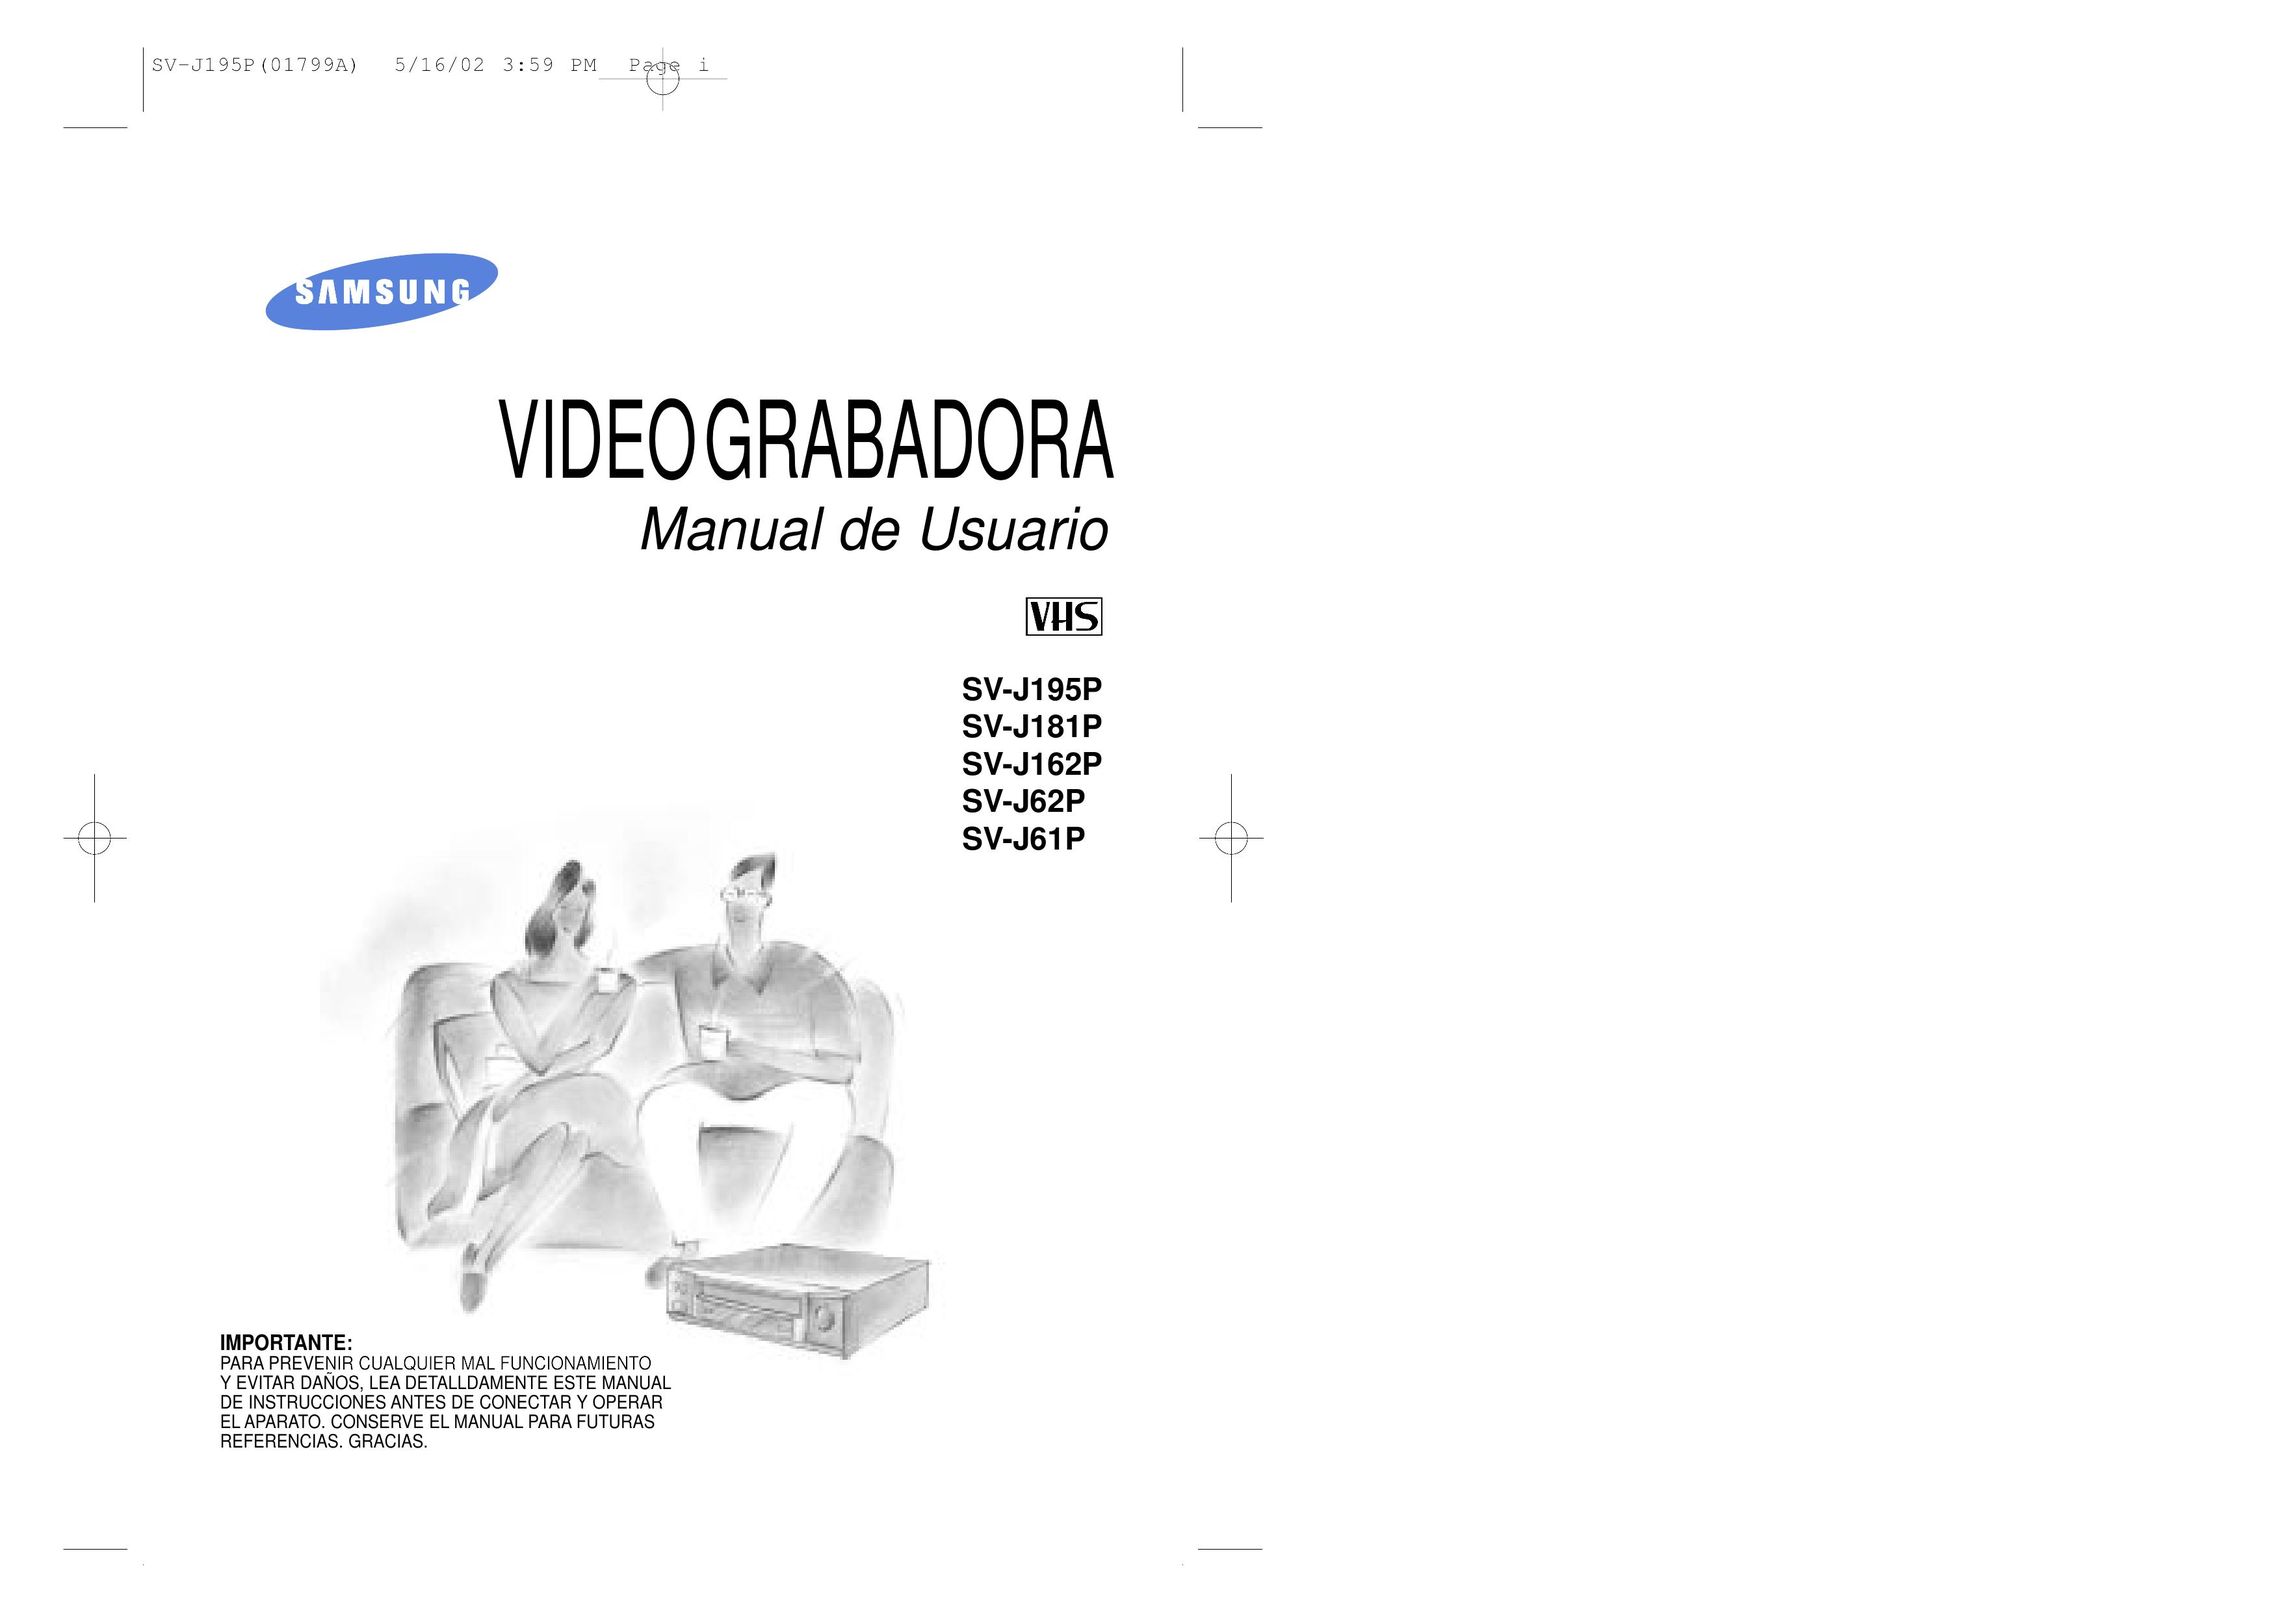 Samsung SV-J62P VCR User Manual